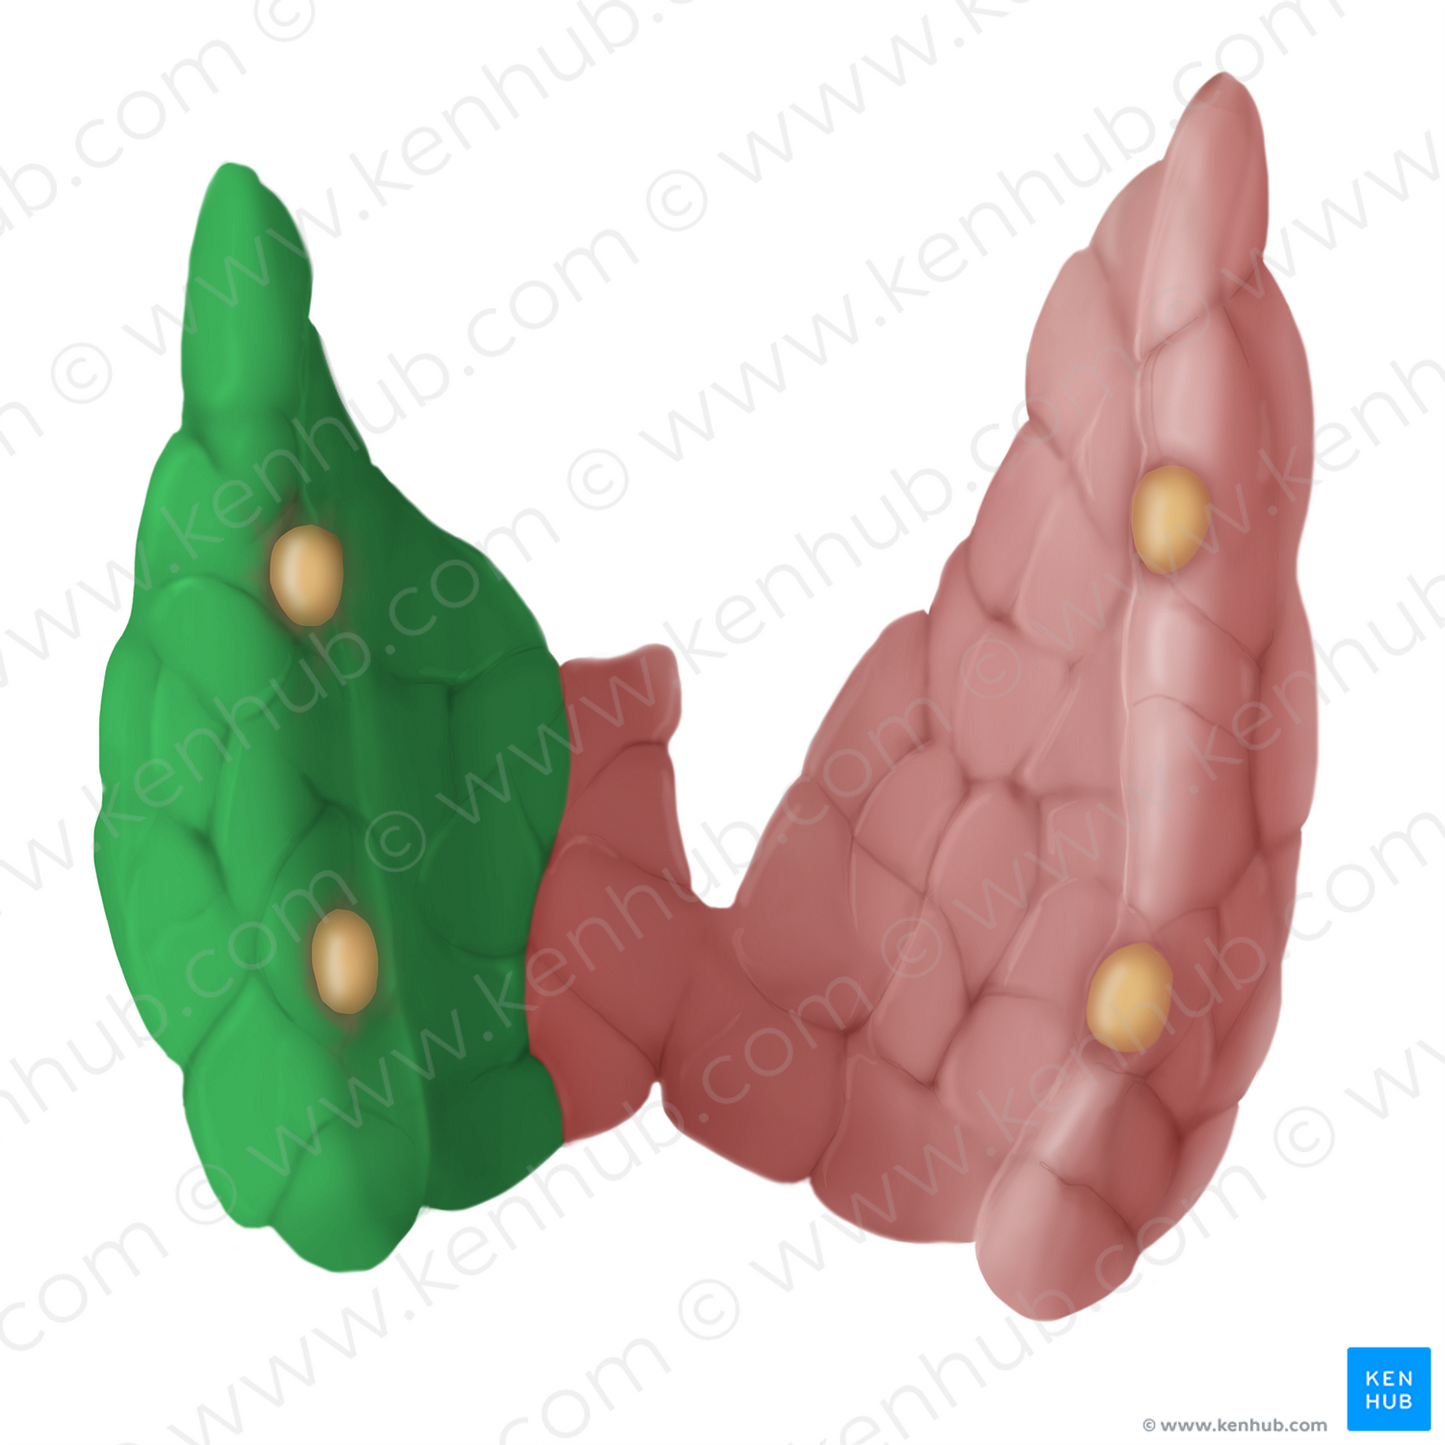 Left lobe of thyroid gland (#14110)